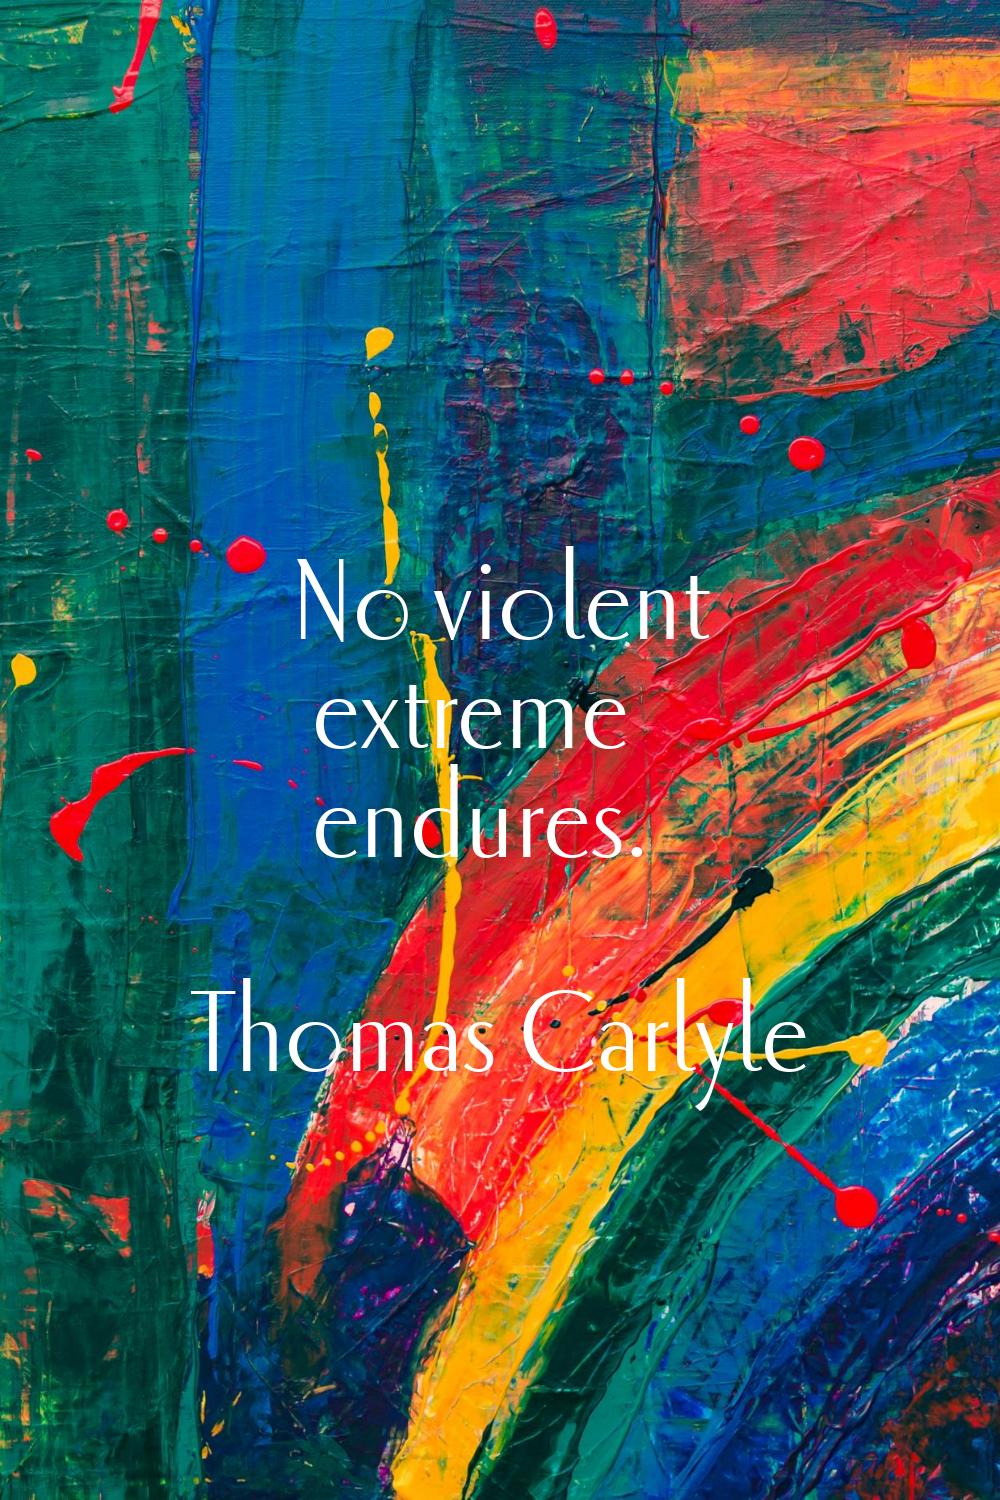 No violent extreme endures.